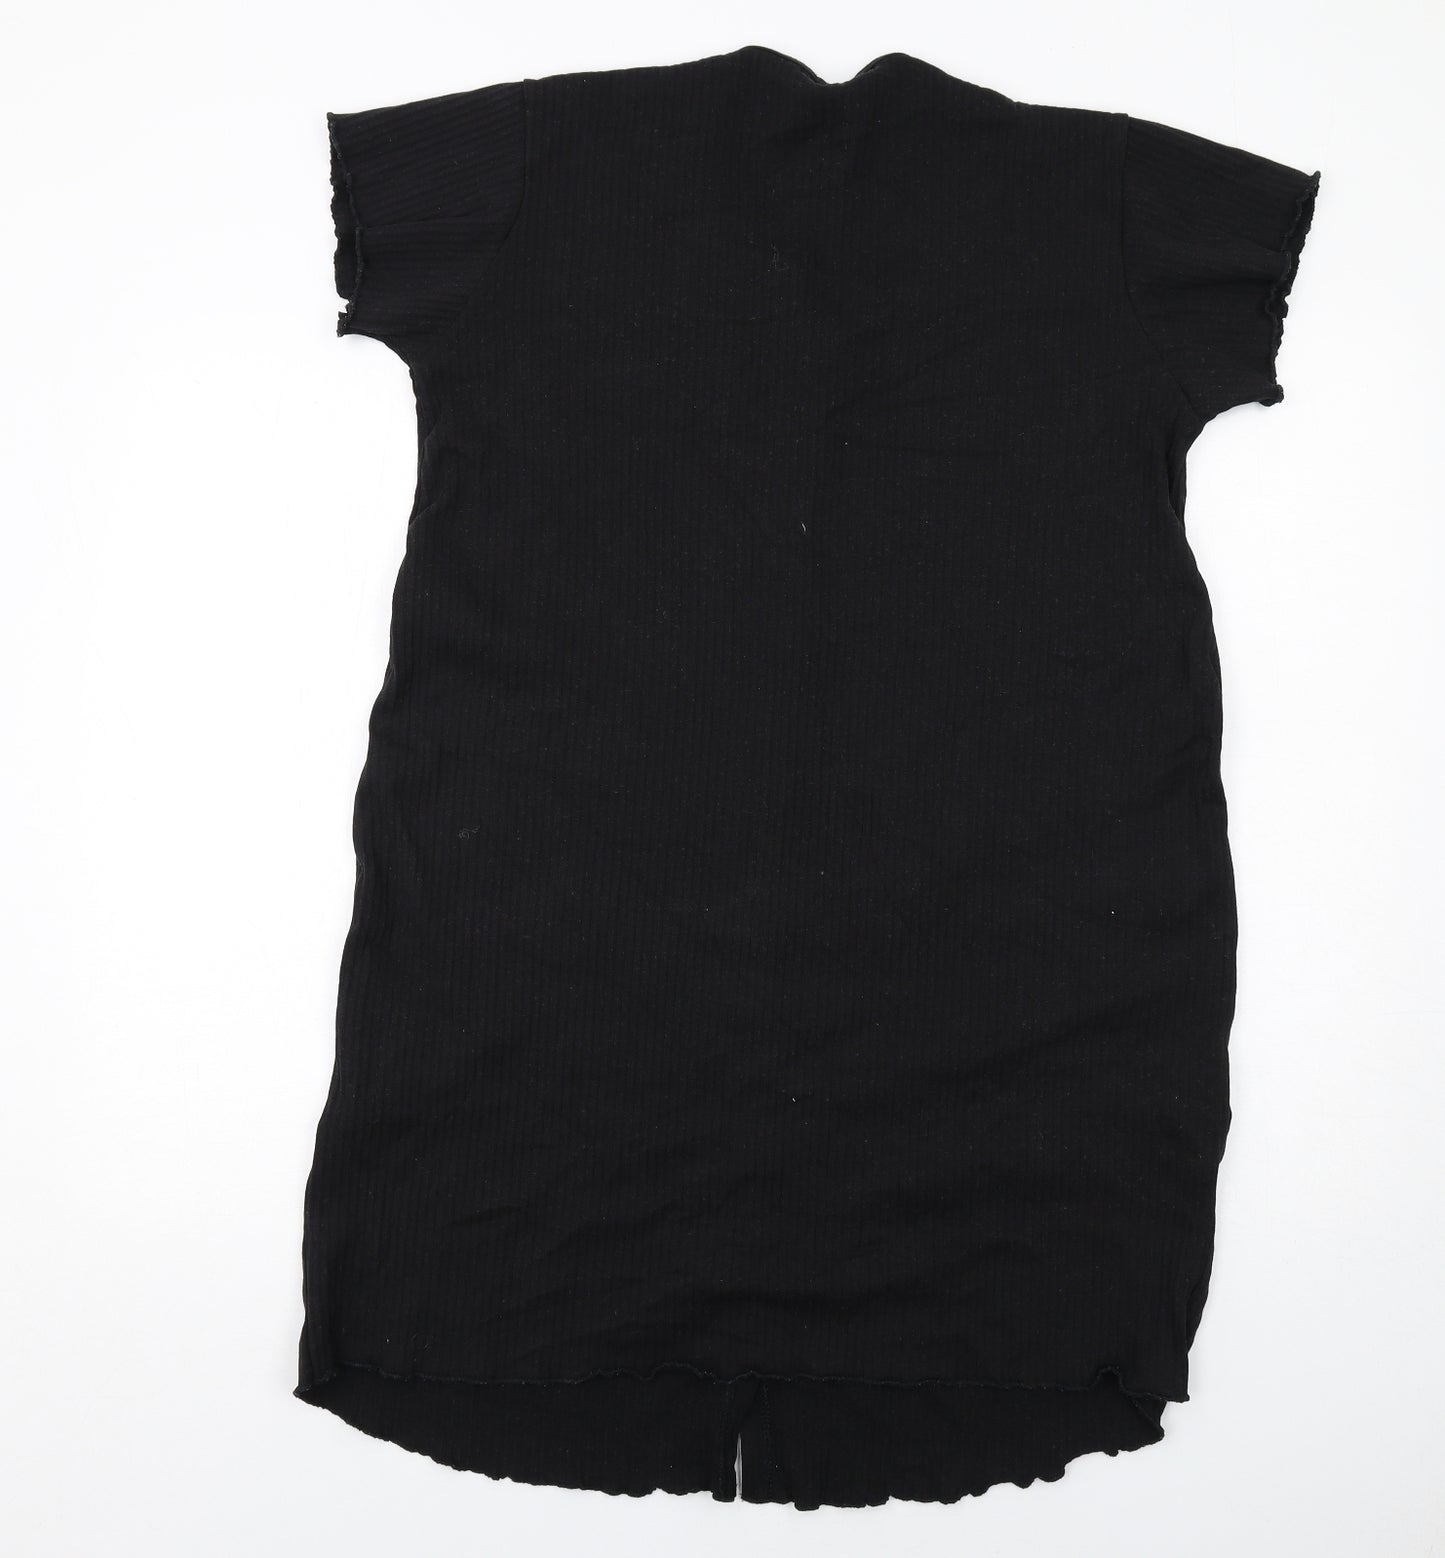 Boohoo Womens Black Polyester T-Shirt Dress Size 14 V-Neck Button